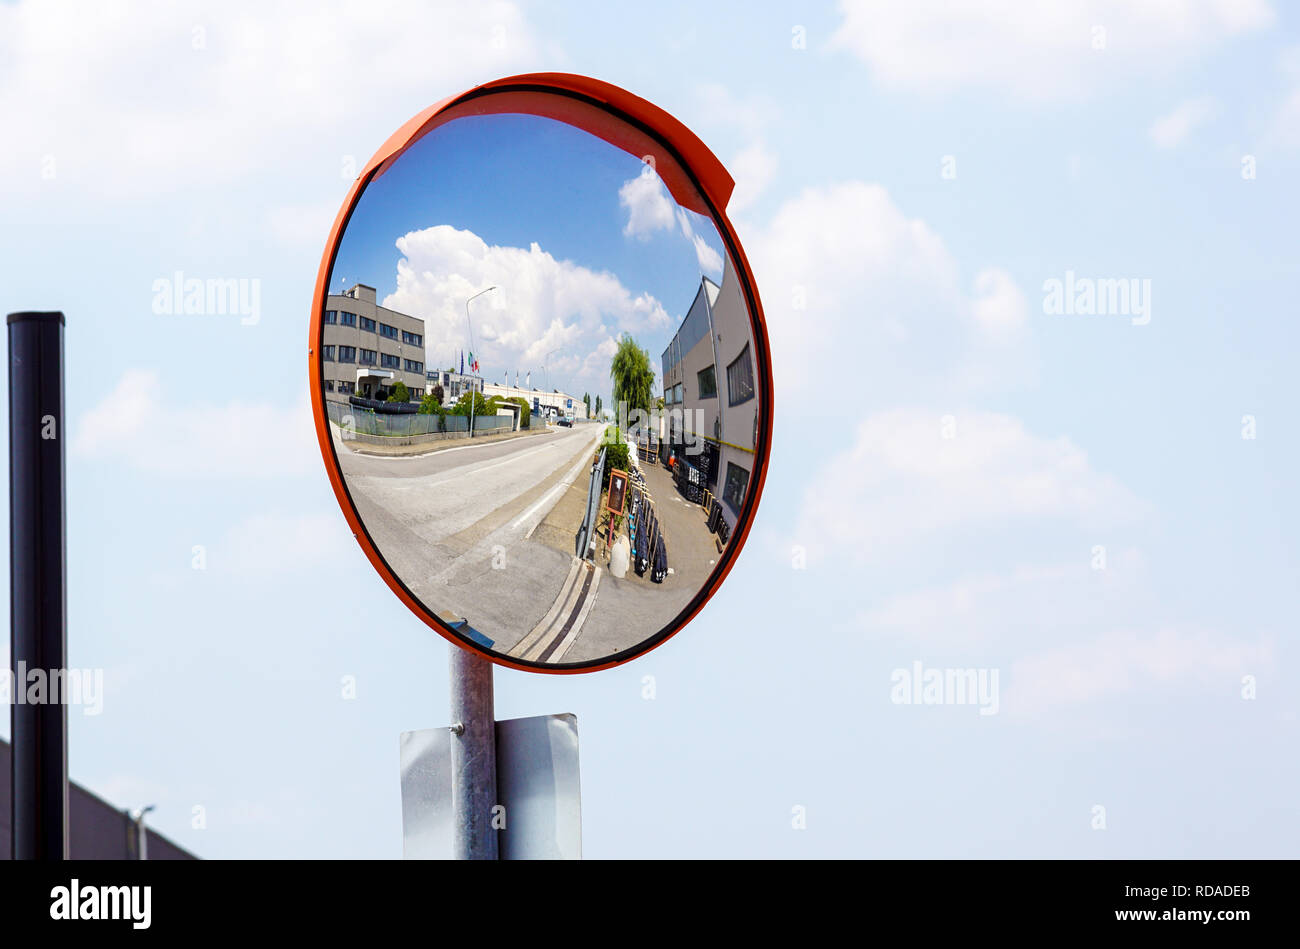 Convex mirror security -Fotos und -Bildmaterial in hoher Auflösung – Alamy